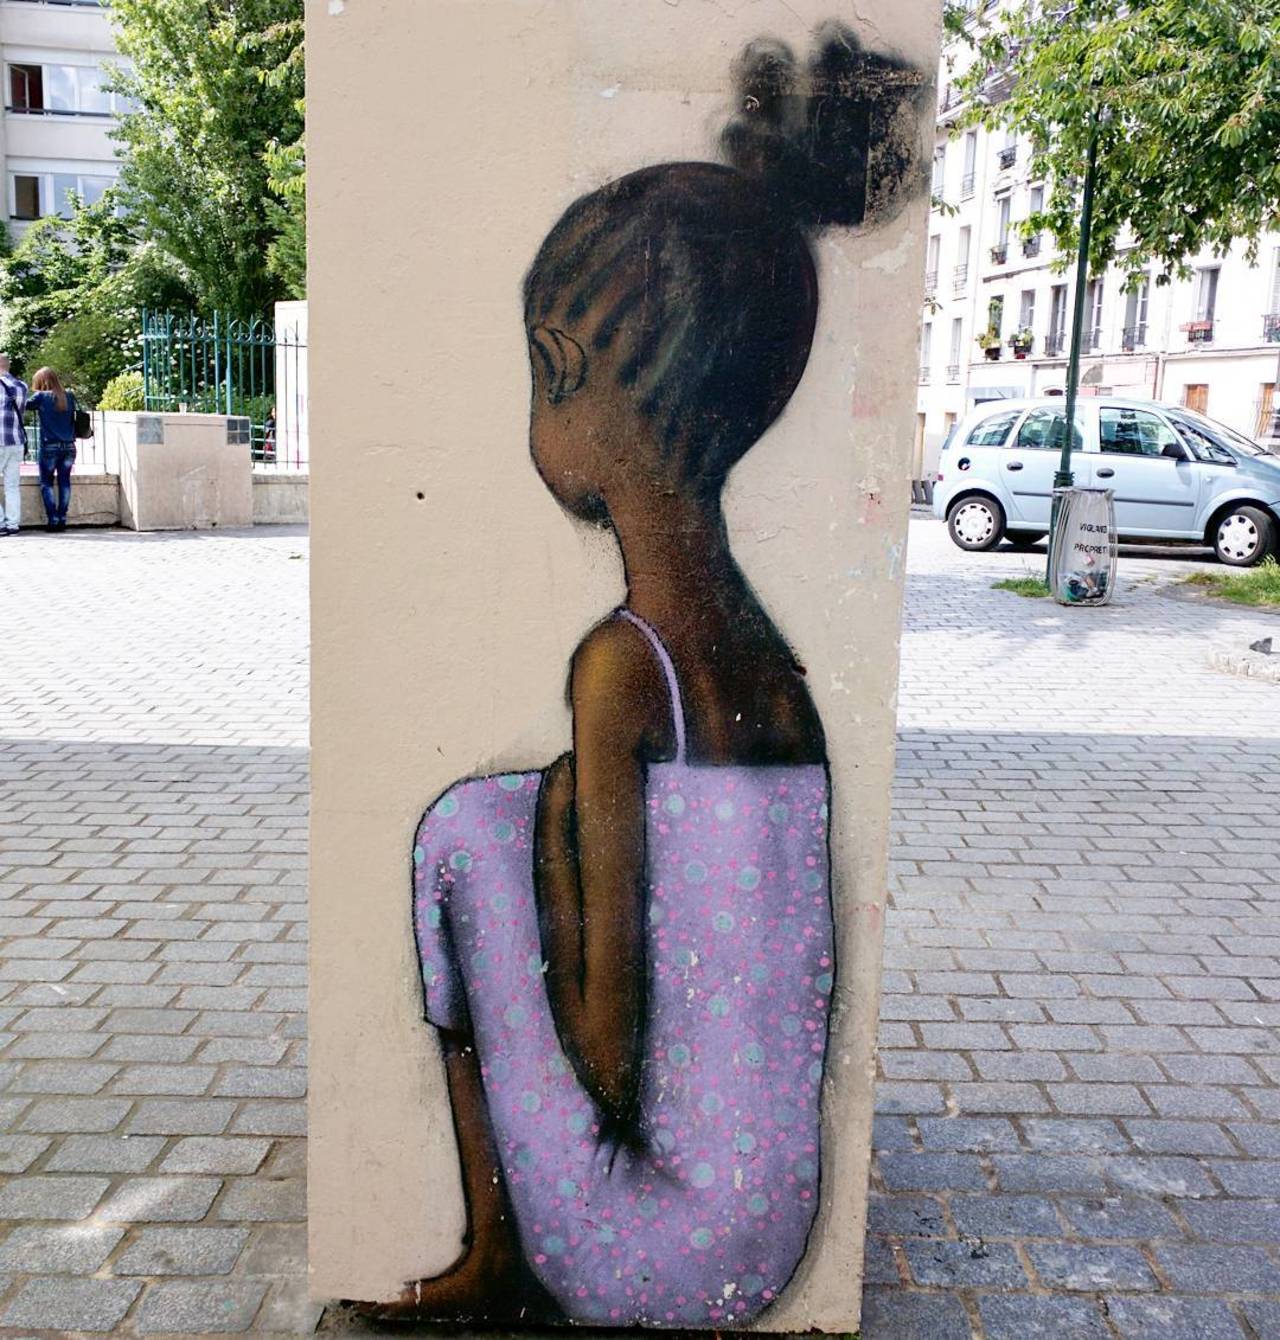 #Paris #graffiti photo by @alphaquadra http://ift.tt/1WPSCUl #StreetArt http://t.co/AsOcGZcpkv